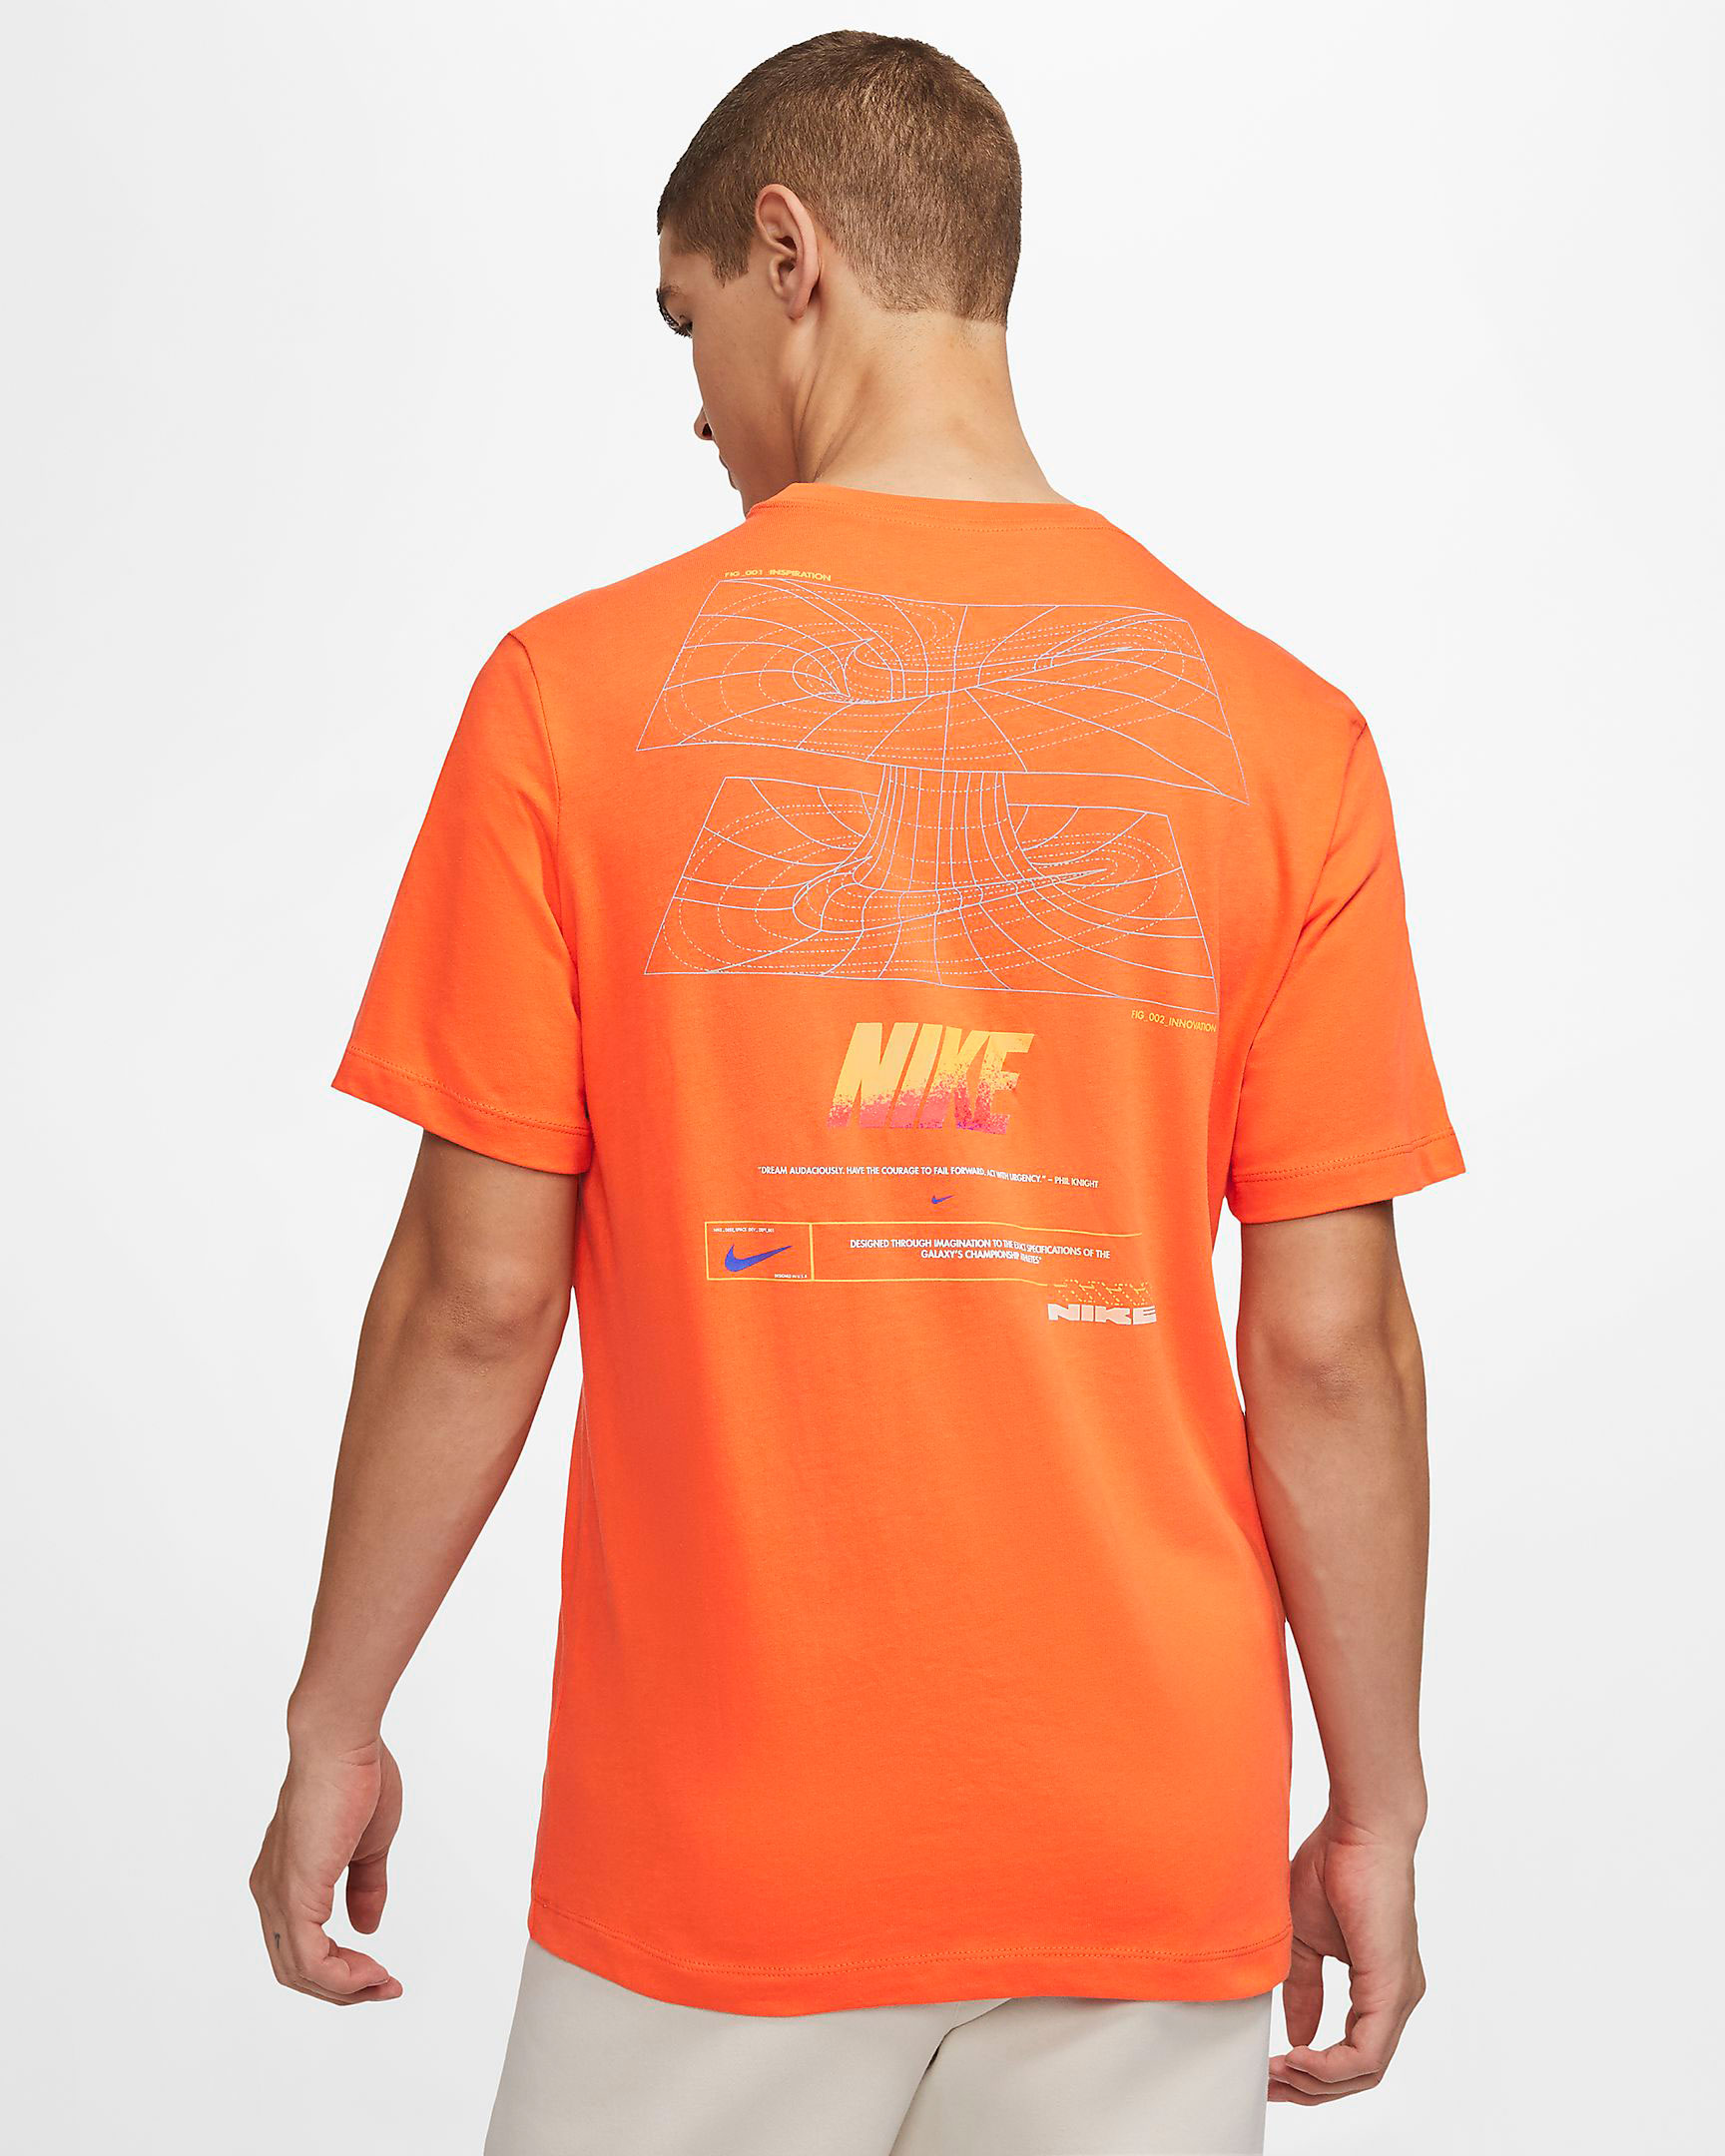 nike-air-foamposite-one-rugged-orange-matching-tee-shirt-2